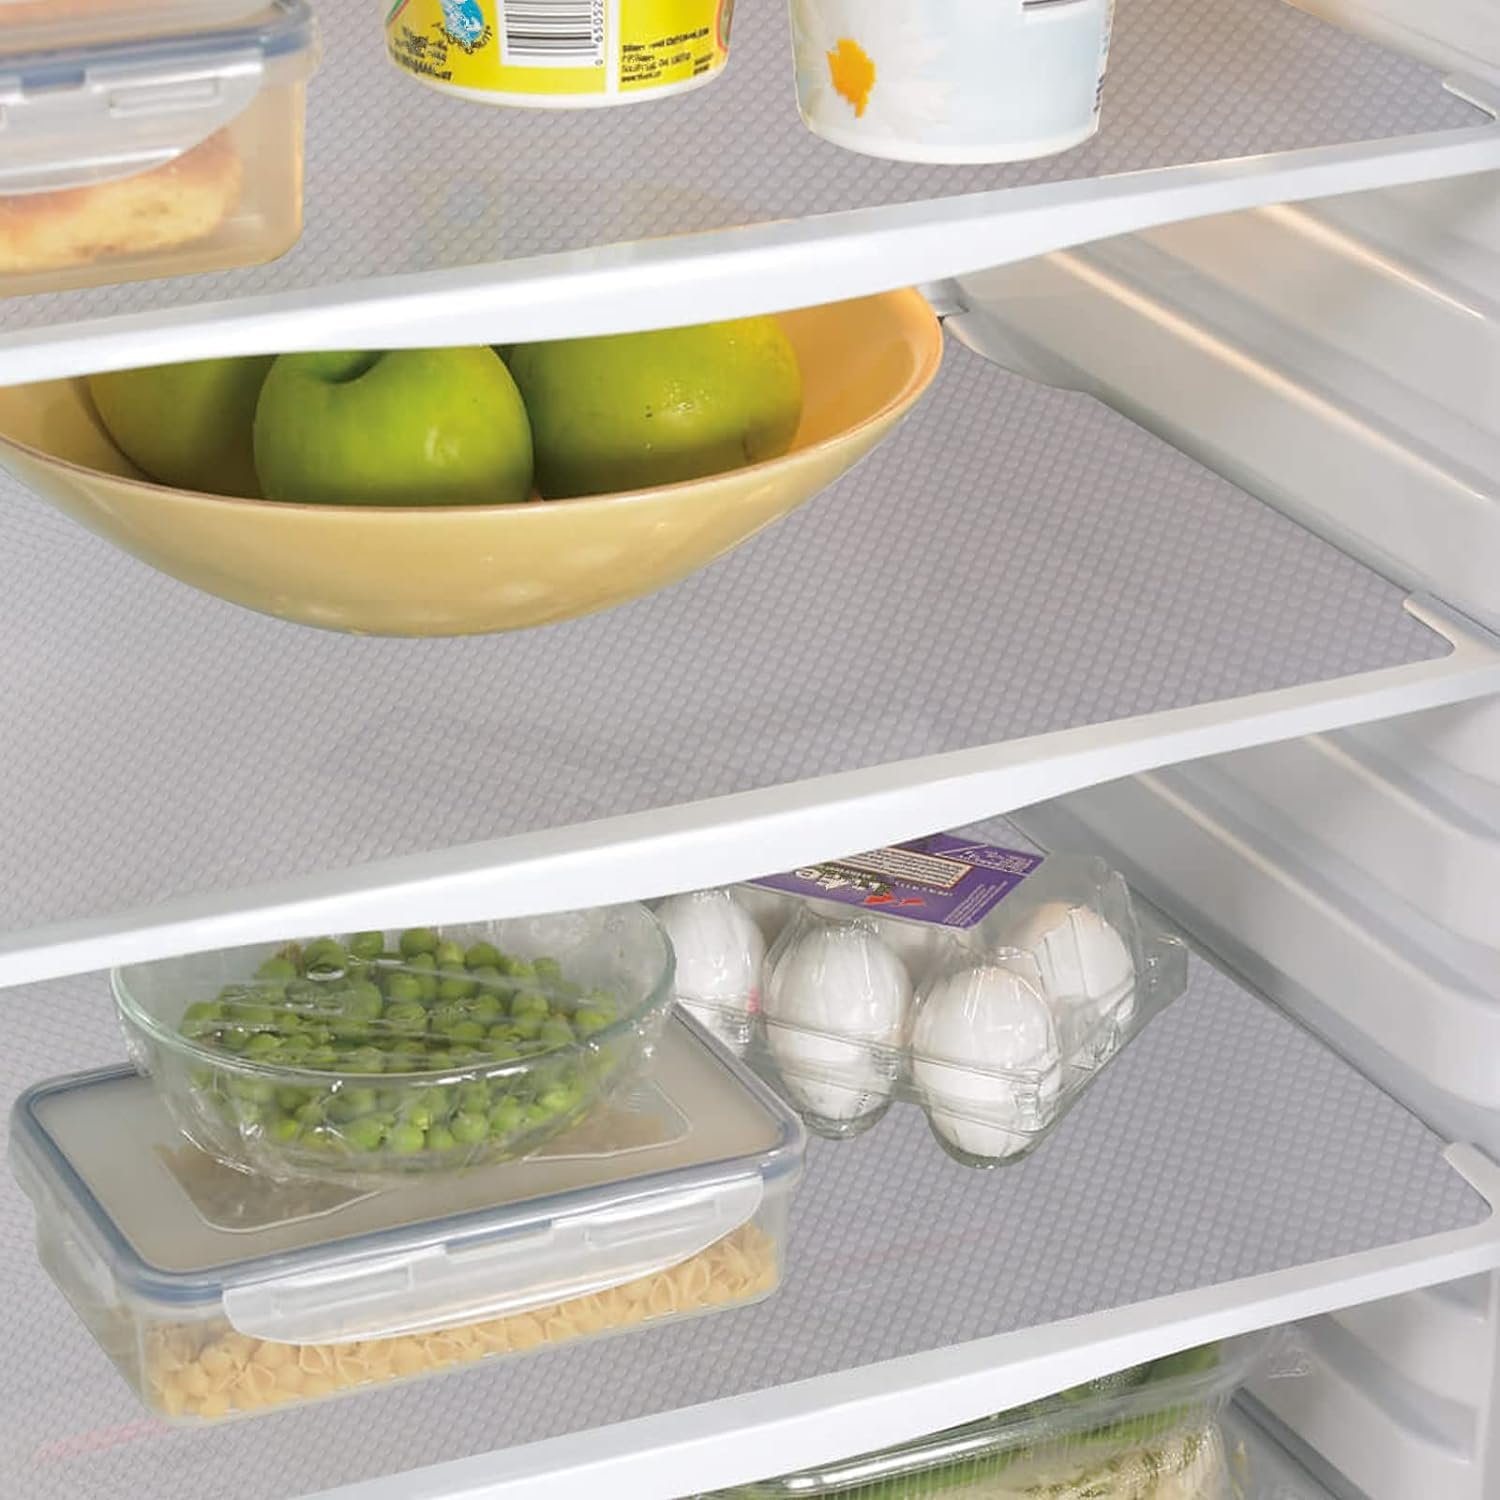 Aiosscd 7 PCS Shelf Mats Antifouling Refrigerator Liners Washable Refrigerator Pads Fridge Mats Drawer Placemats Home Kitchen Gadgets Accessories Organization for Top Freezer(2green+2pink+3blue)